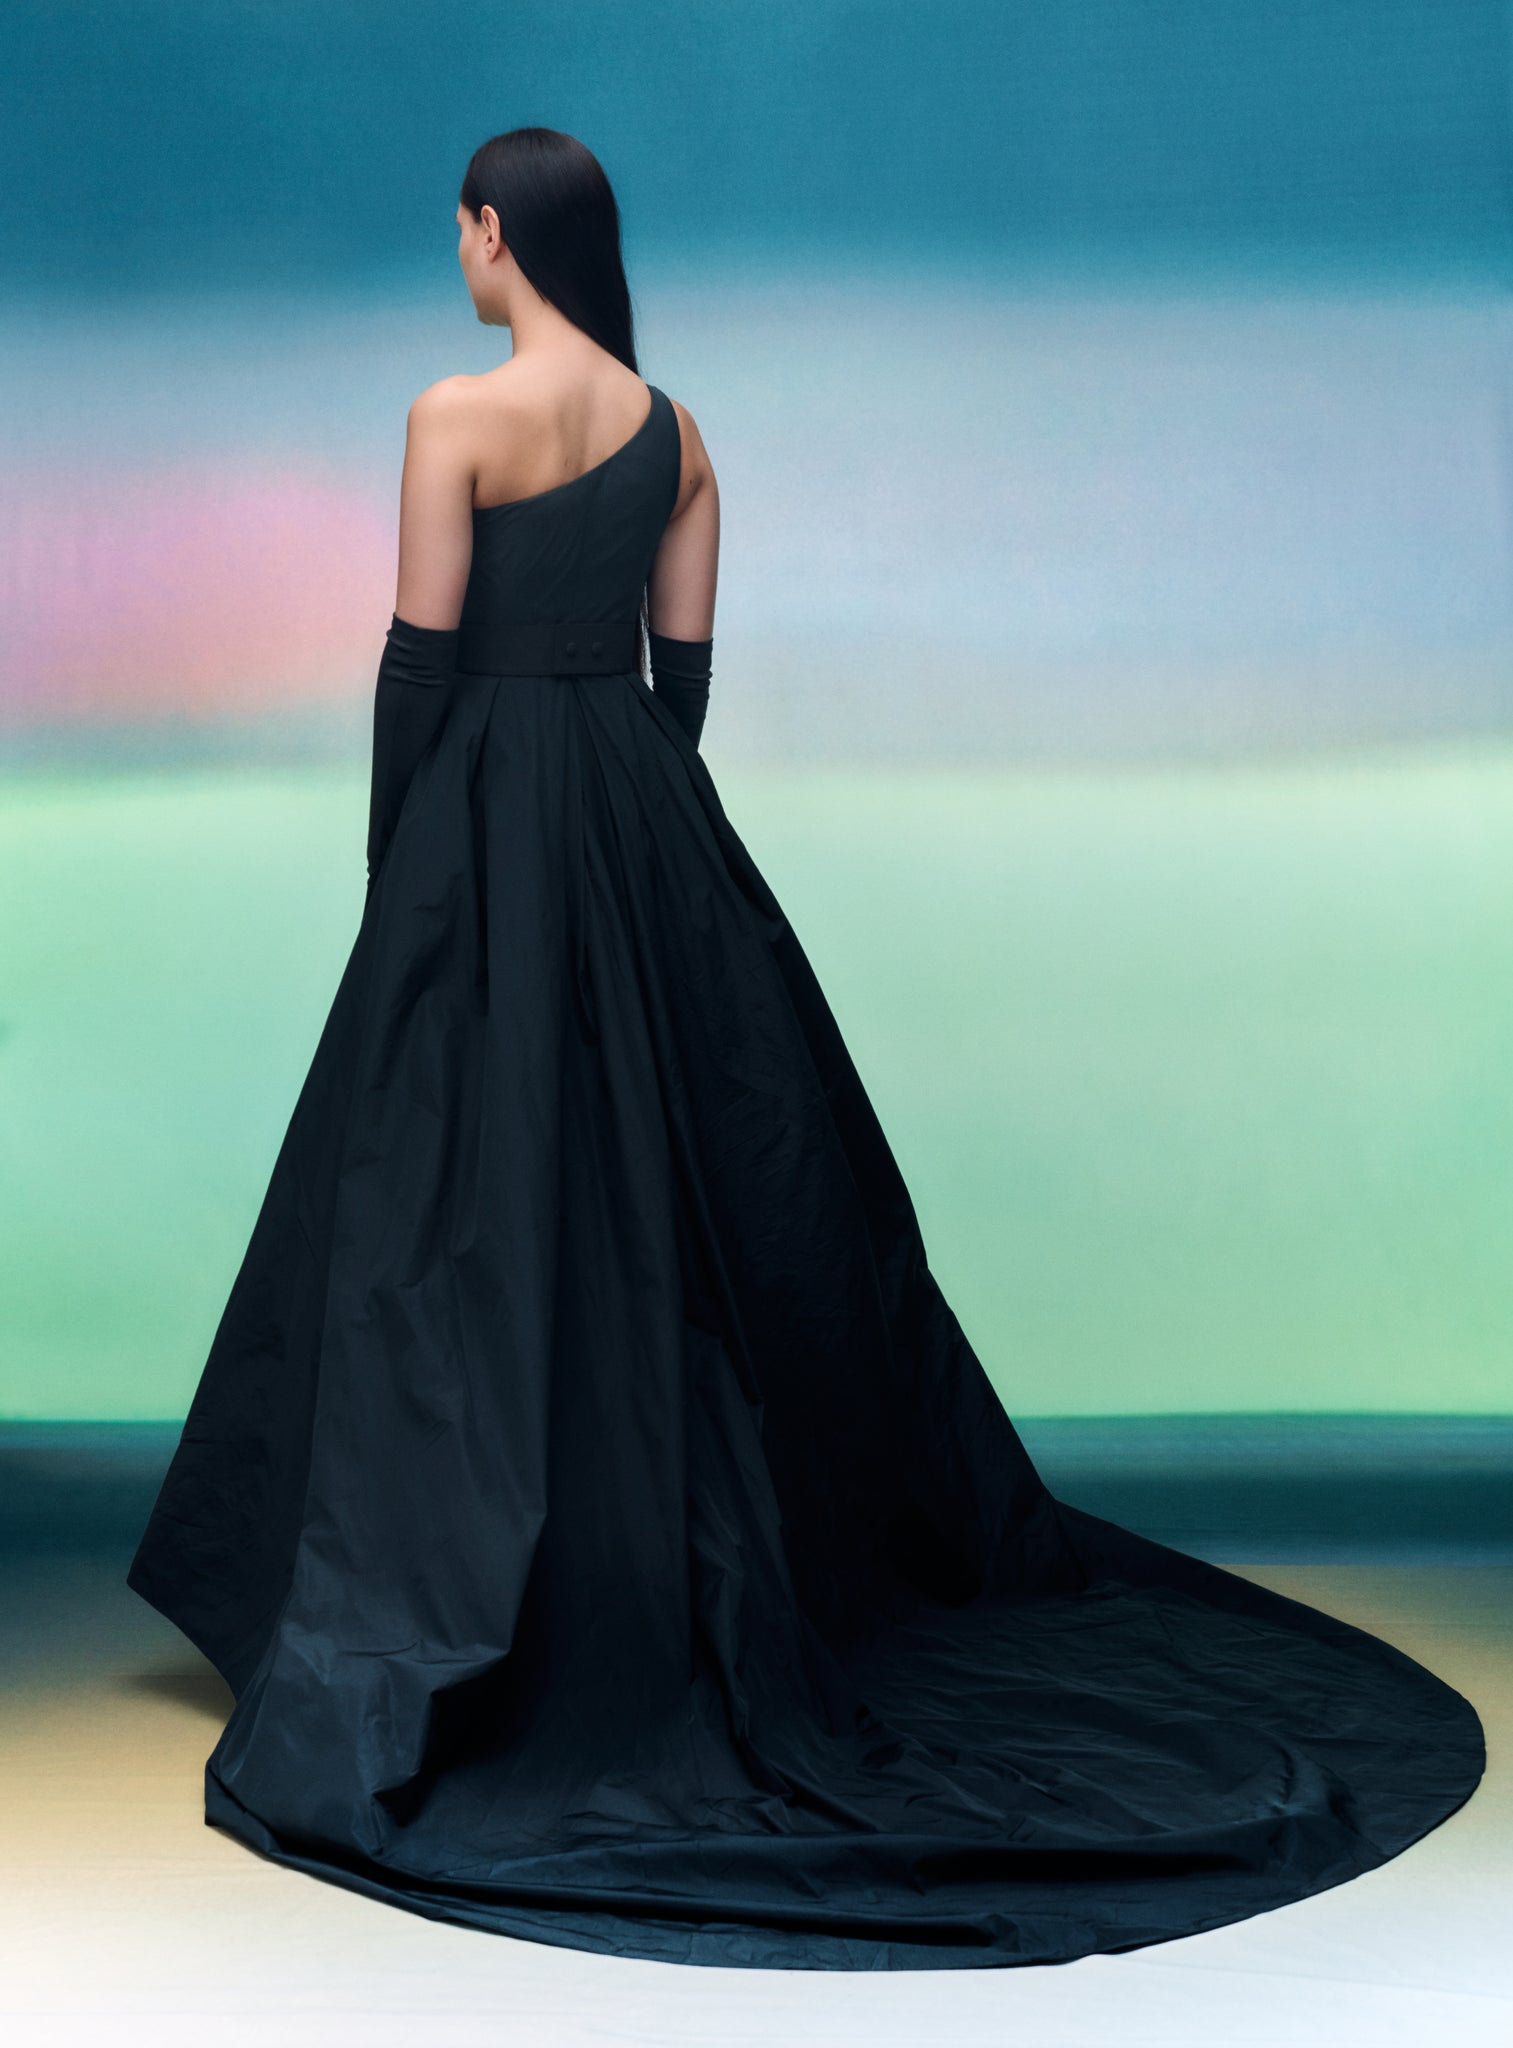 The Xelia Maxi Dress in Black